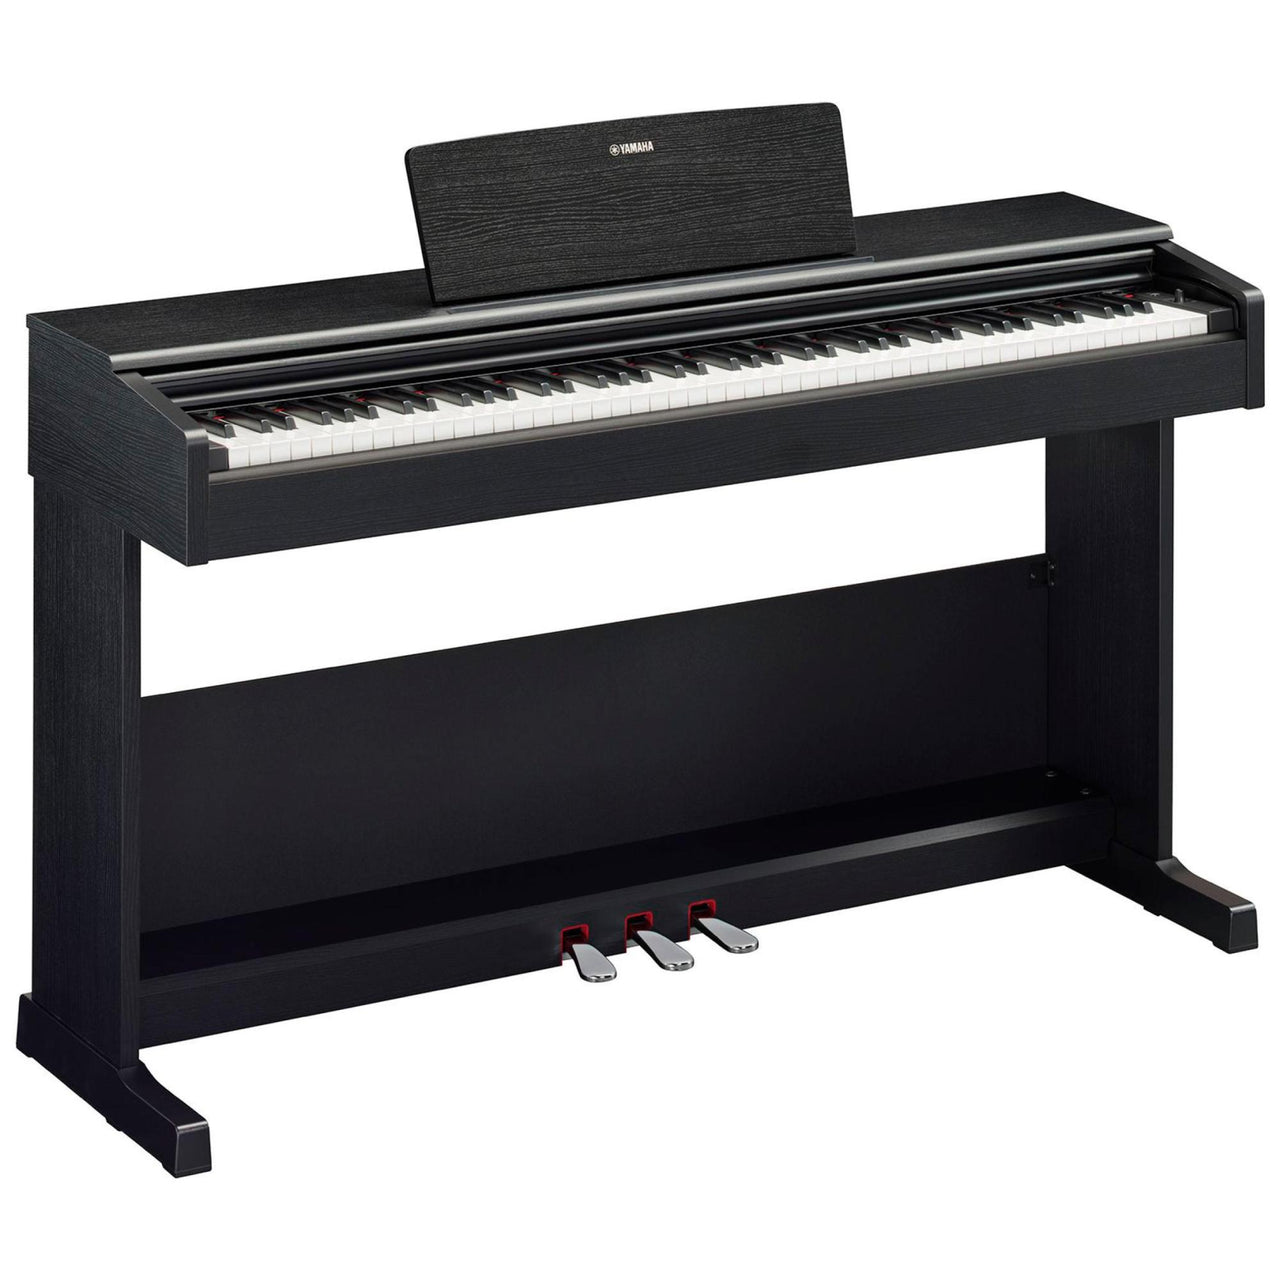 Piano Digital Yamaha Arius 105b C/adap Pa150, Ydp105bset